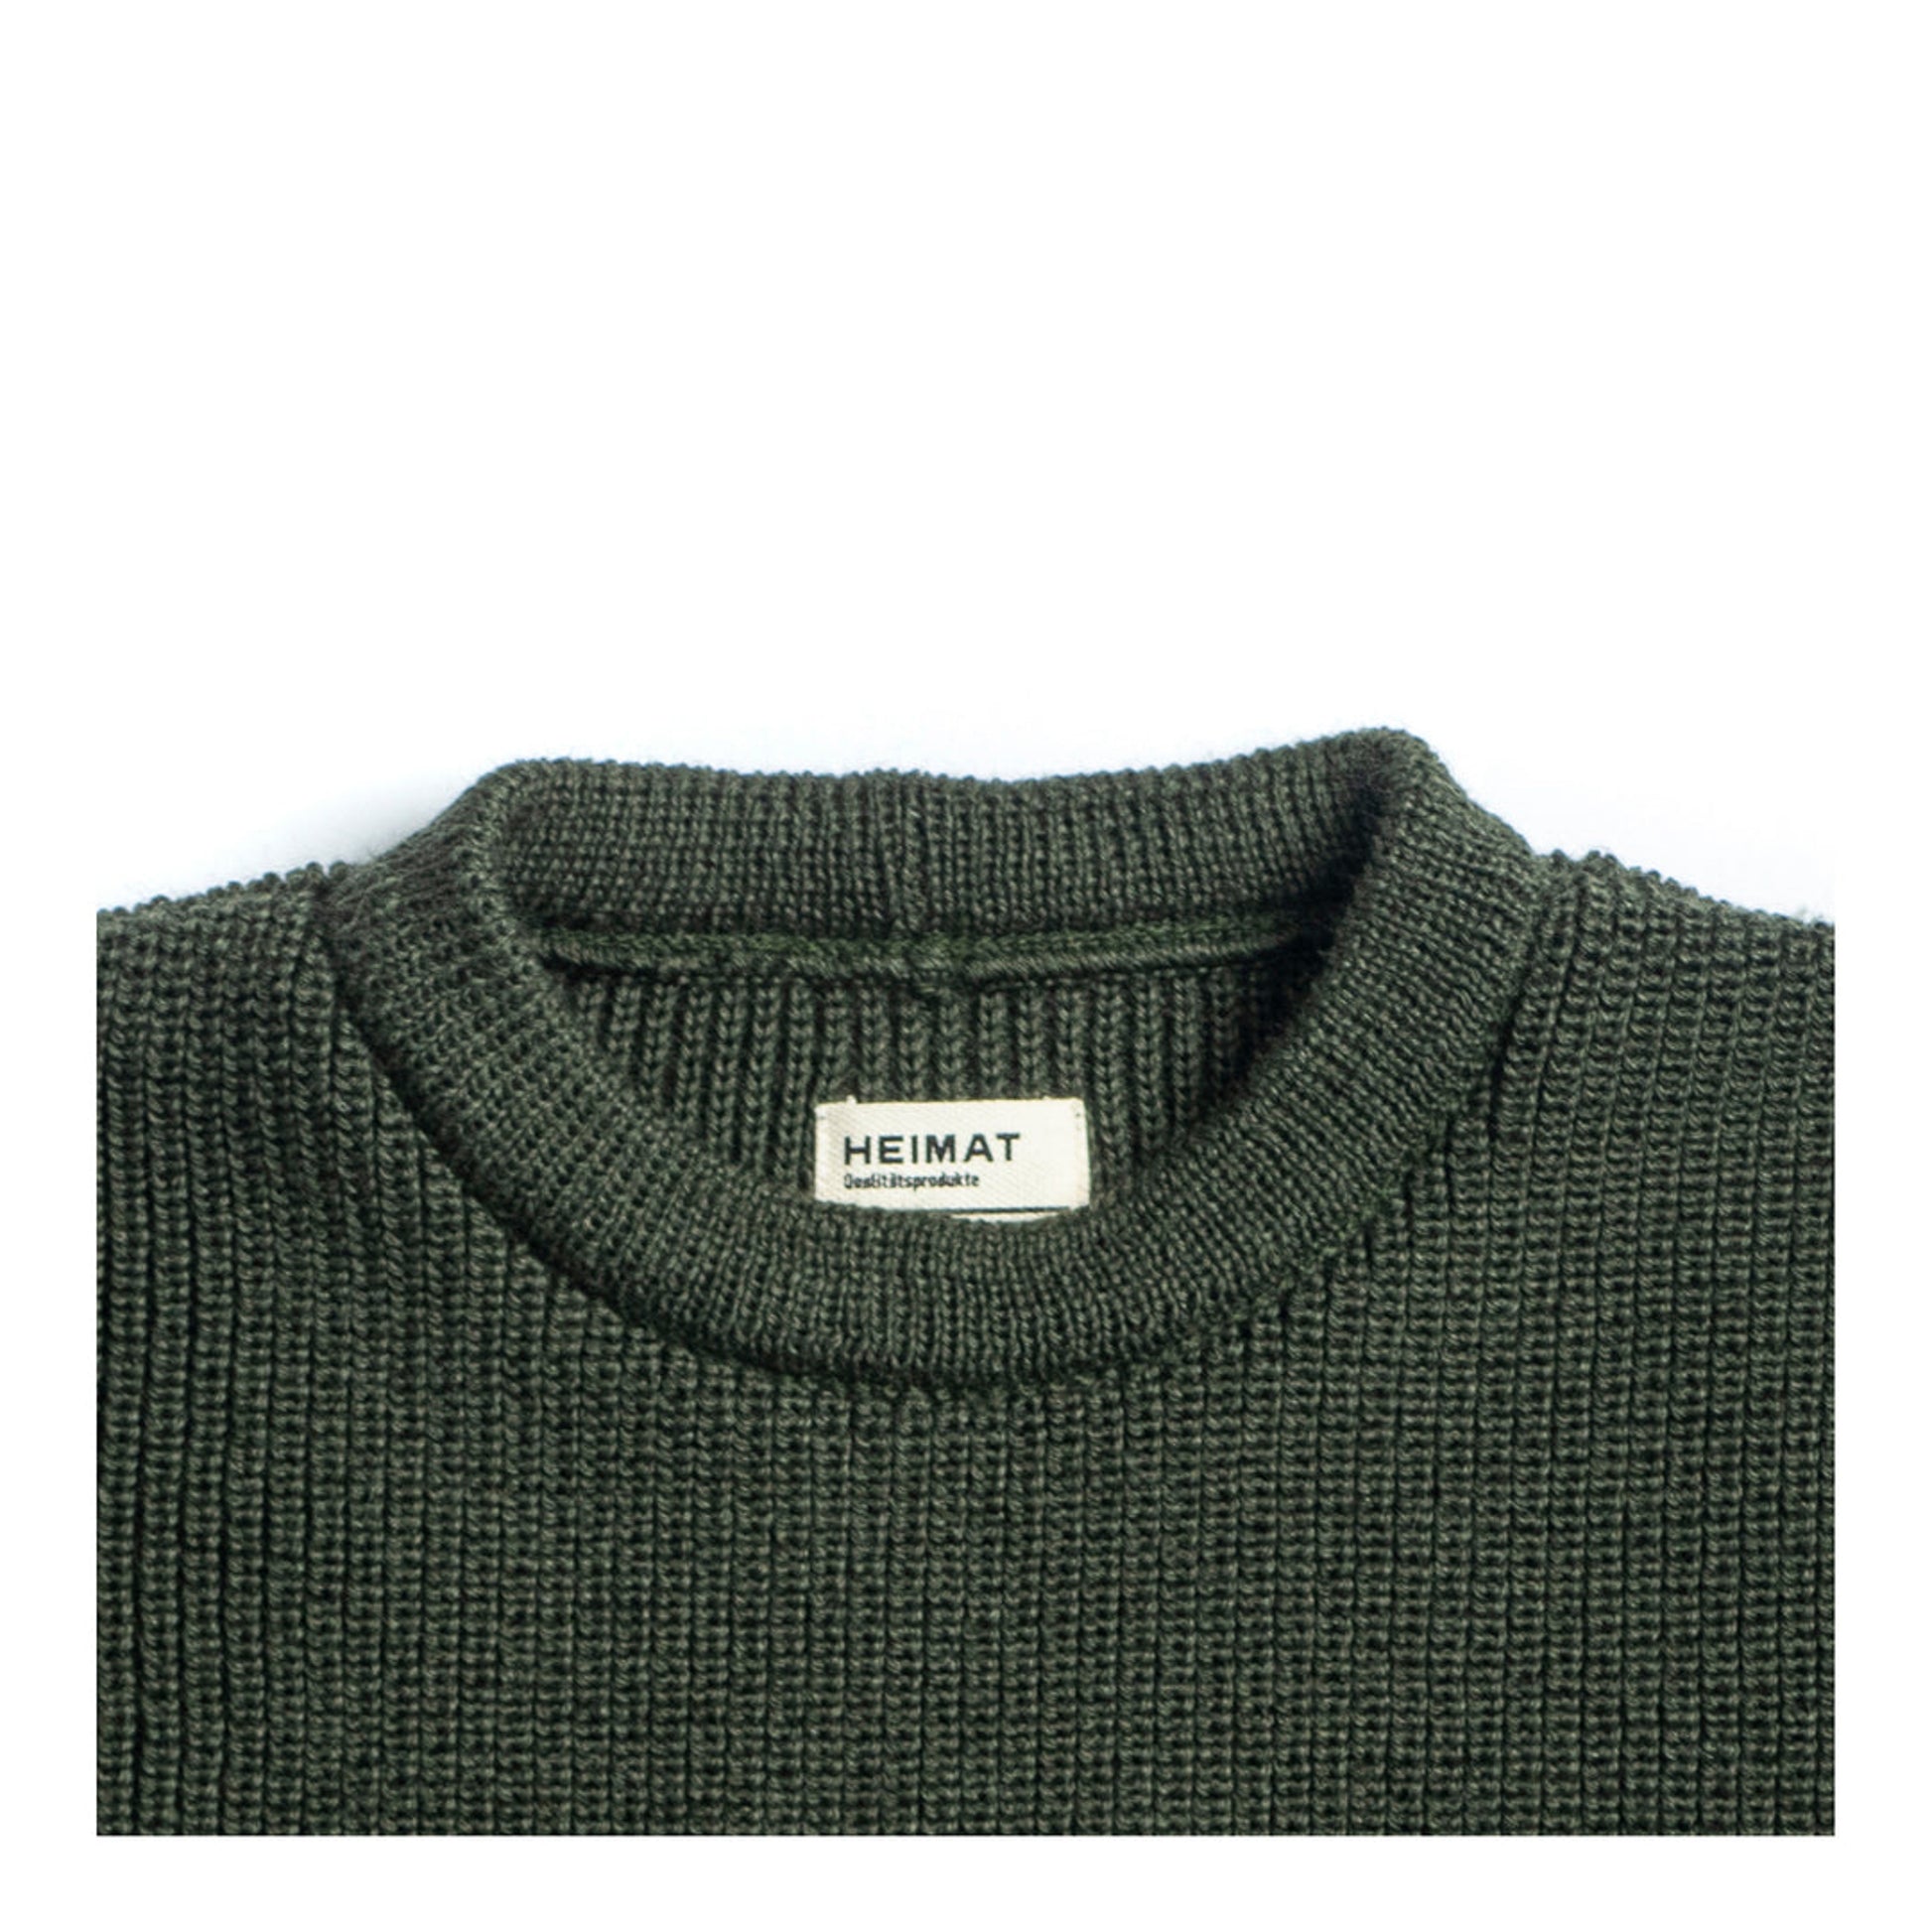 Wool bleubrut Virgin - Green Military – Rundhals Sweater